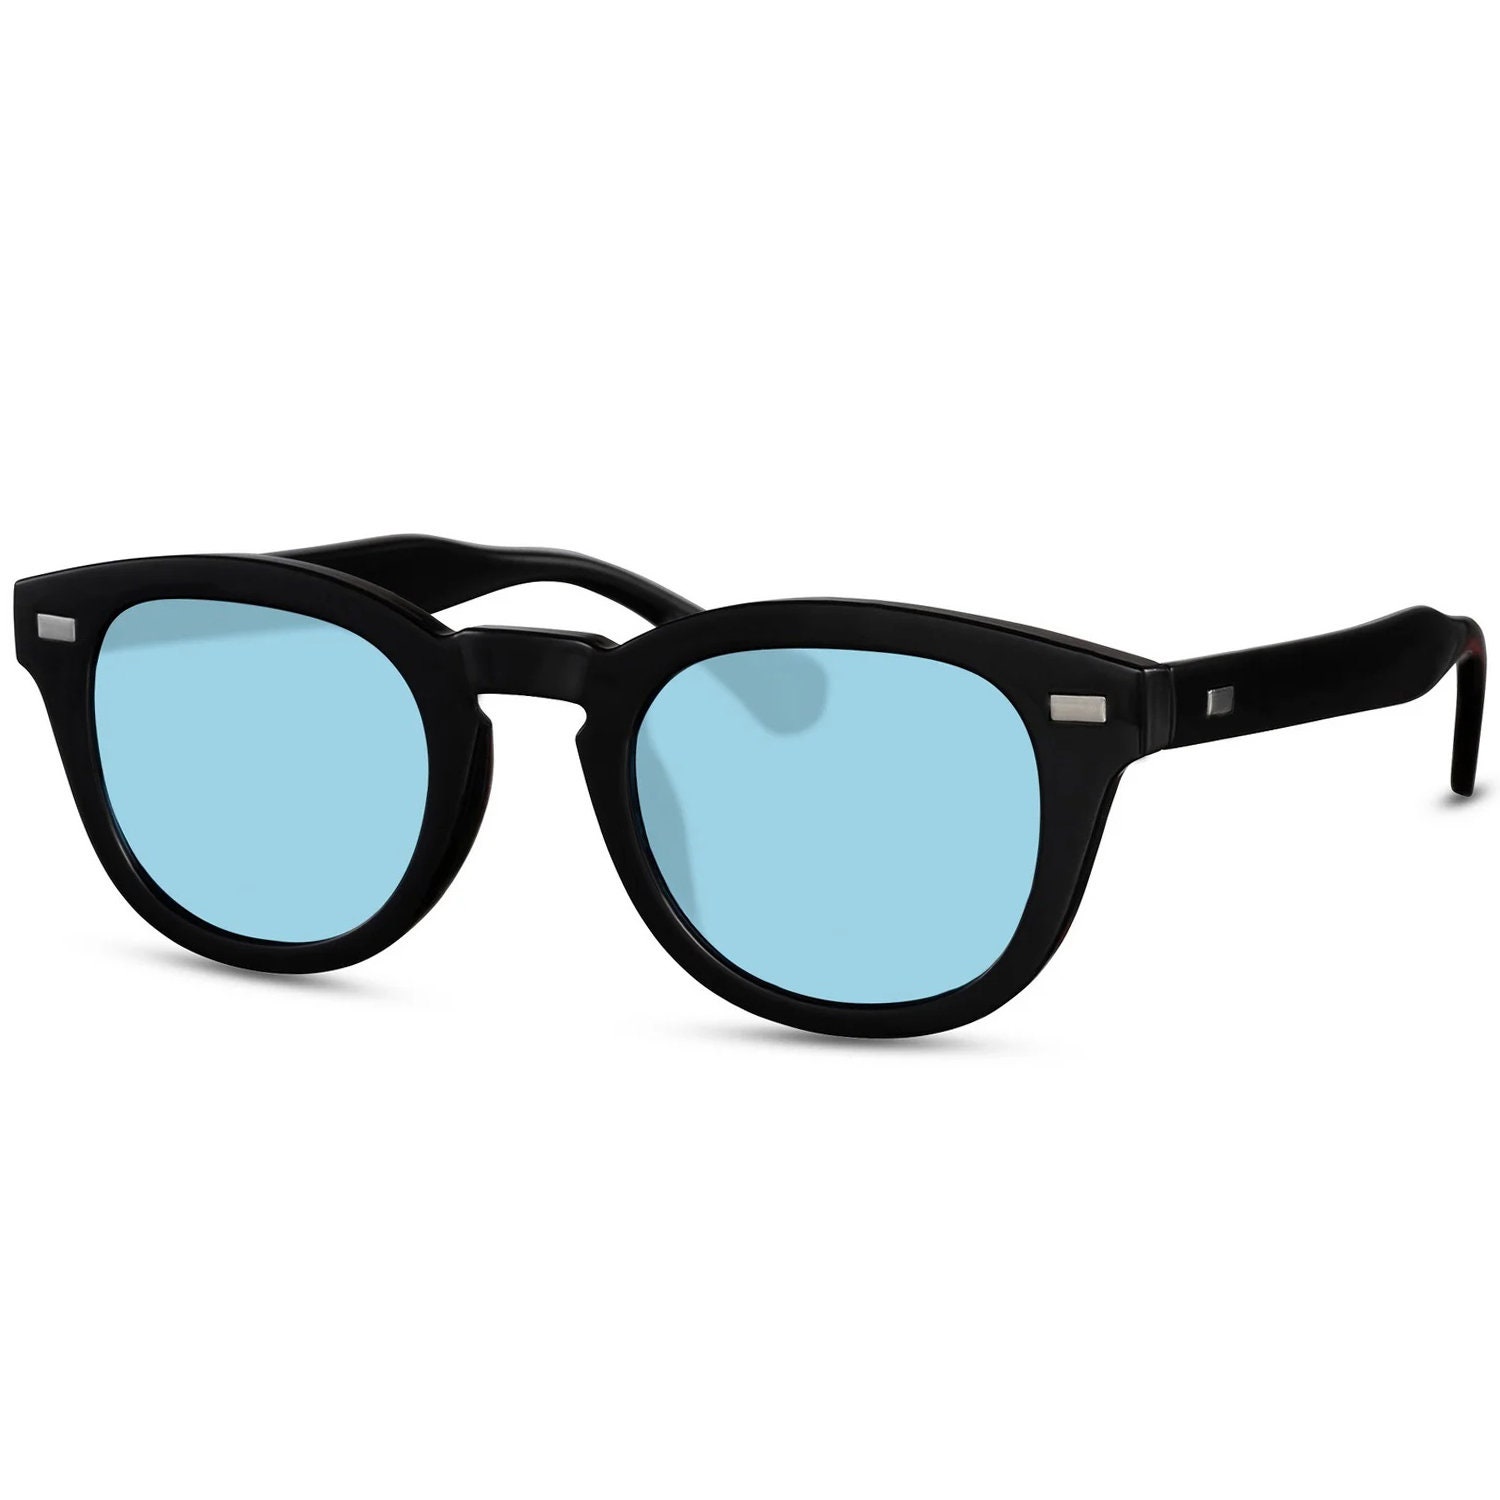 Retro Johnny Depp sunglasses mens women's artists crystal G15  polarized lenses